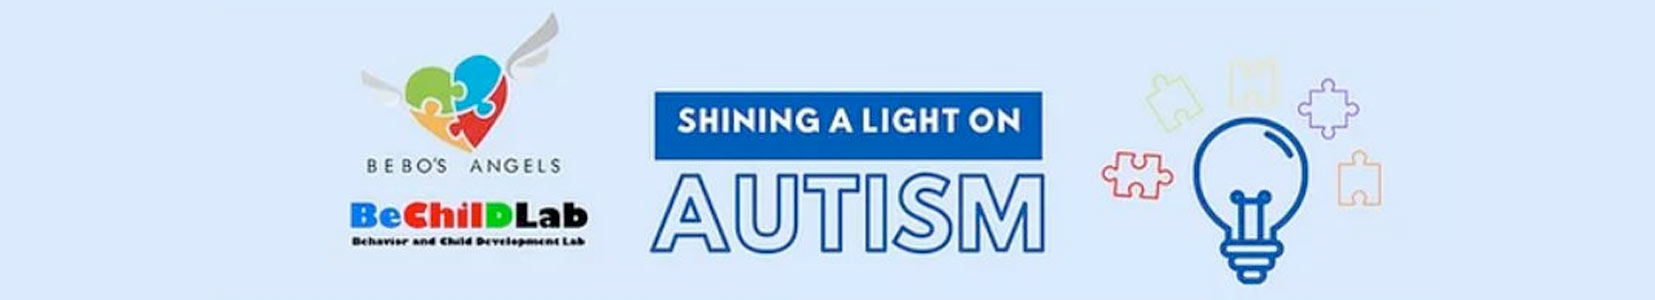 podcast banner shining a light on autism, bechildlab logo